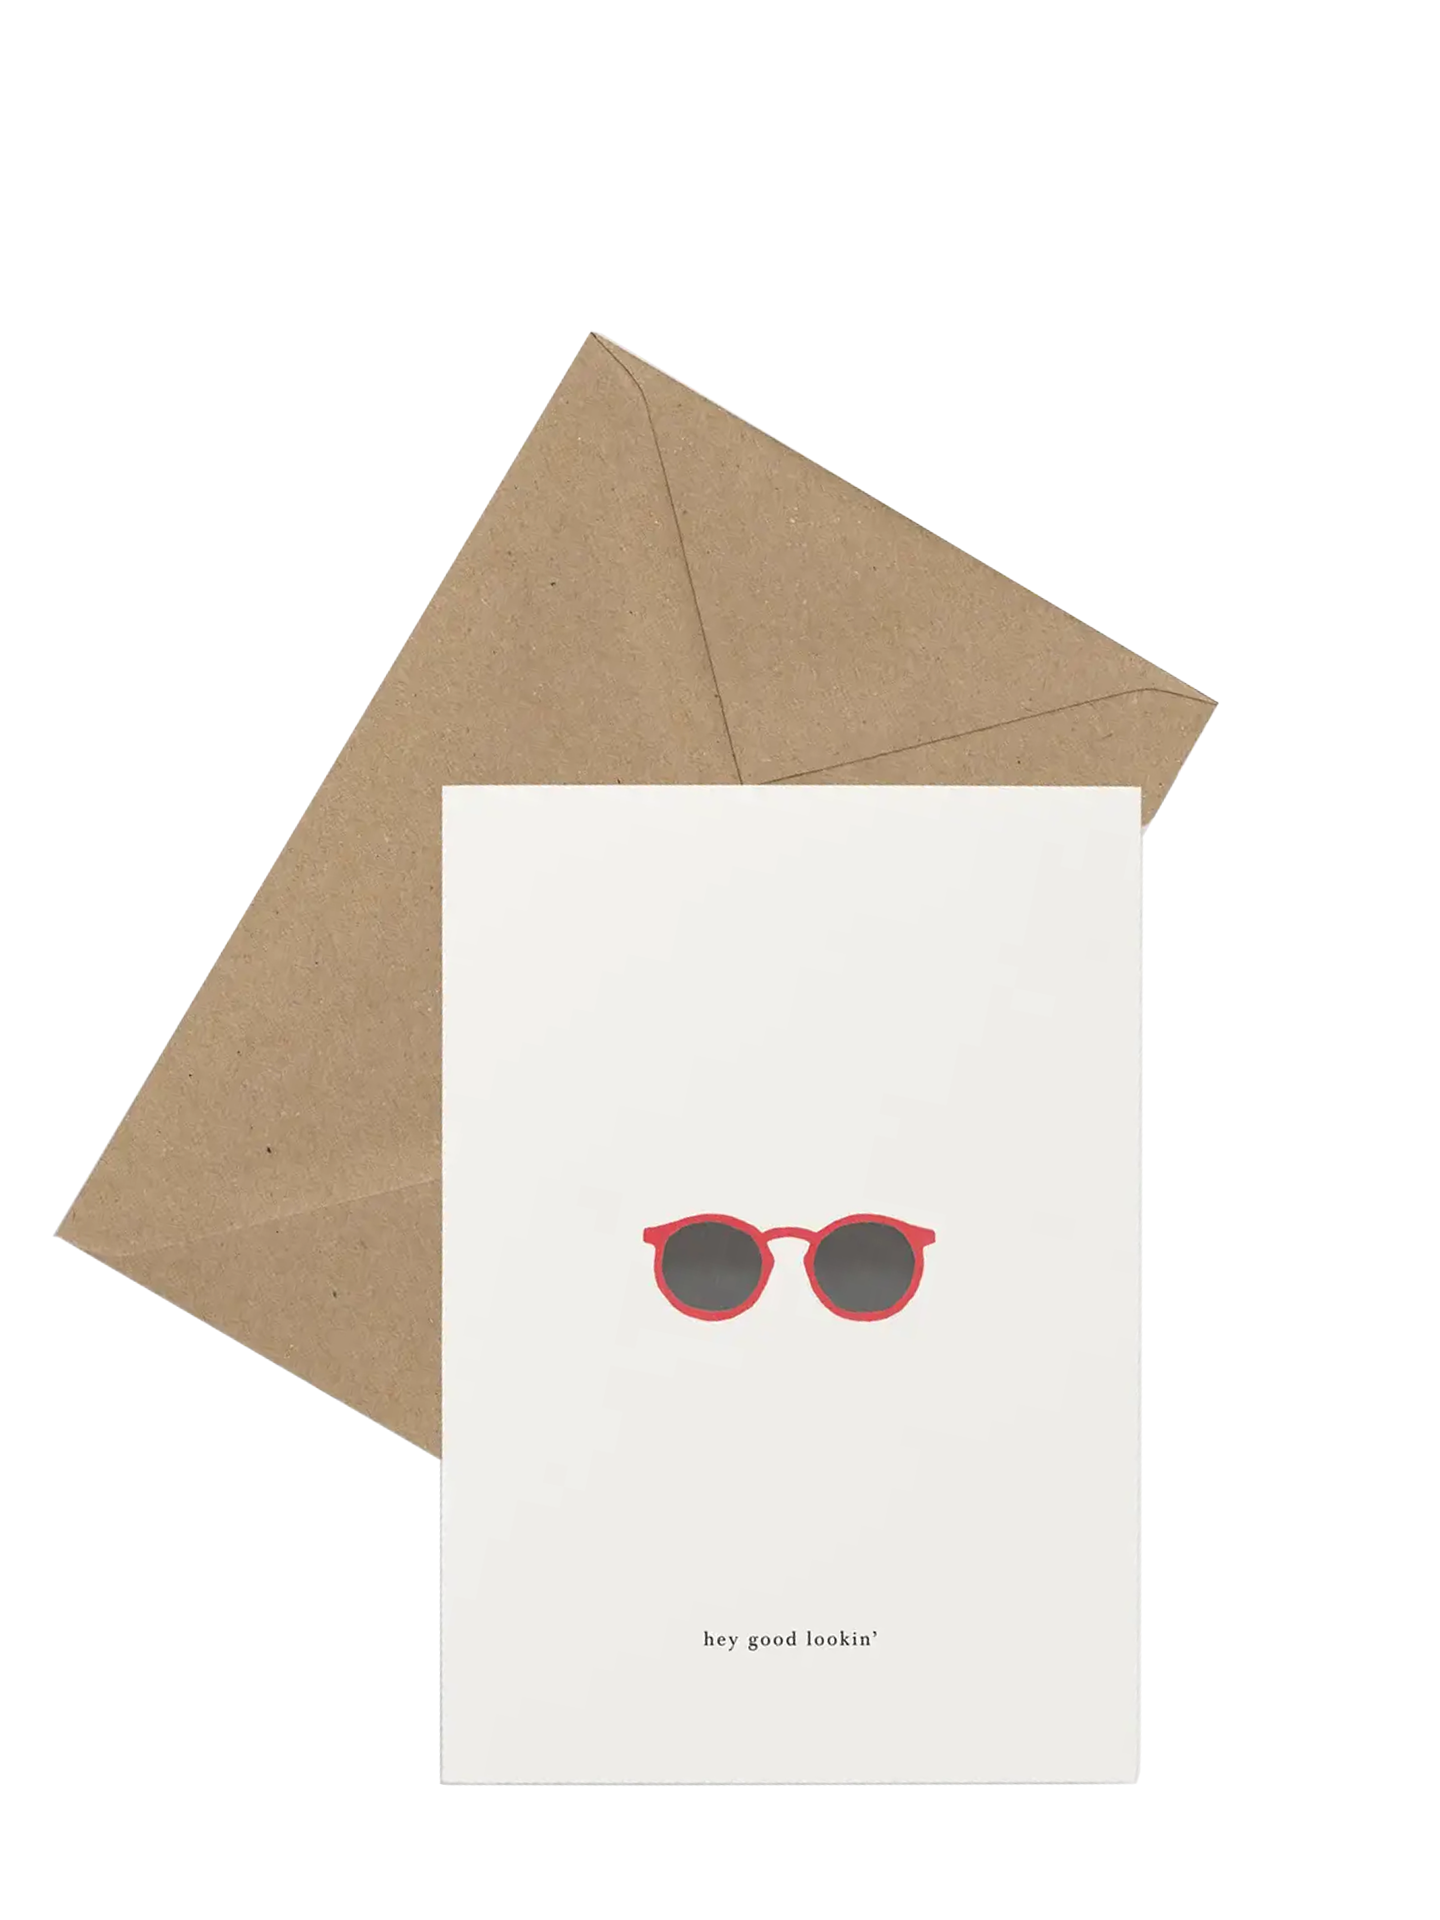 Sunglasses (hey good lookin') Love card